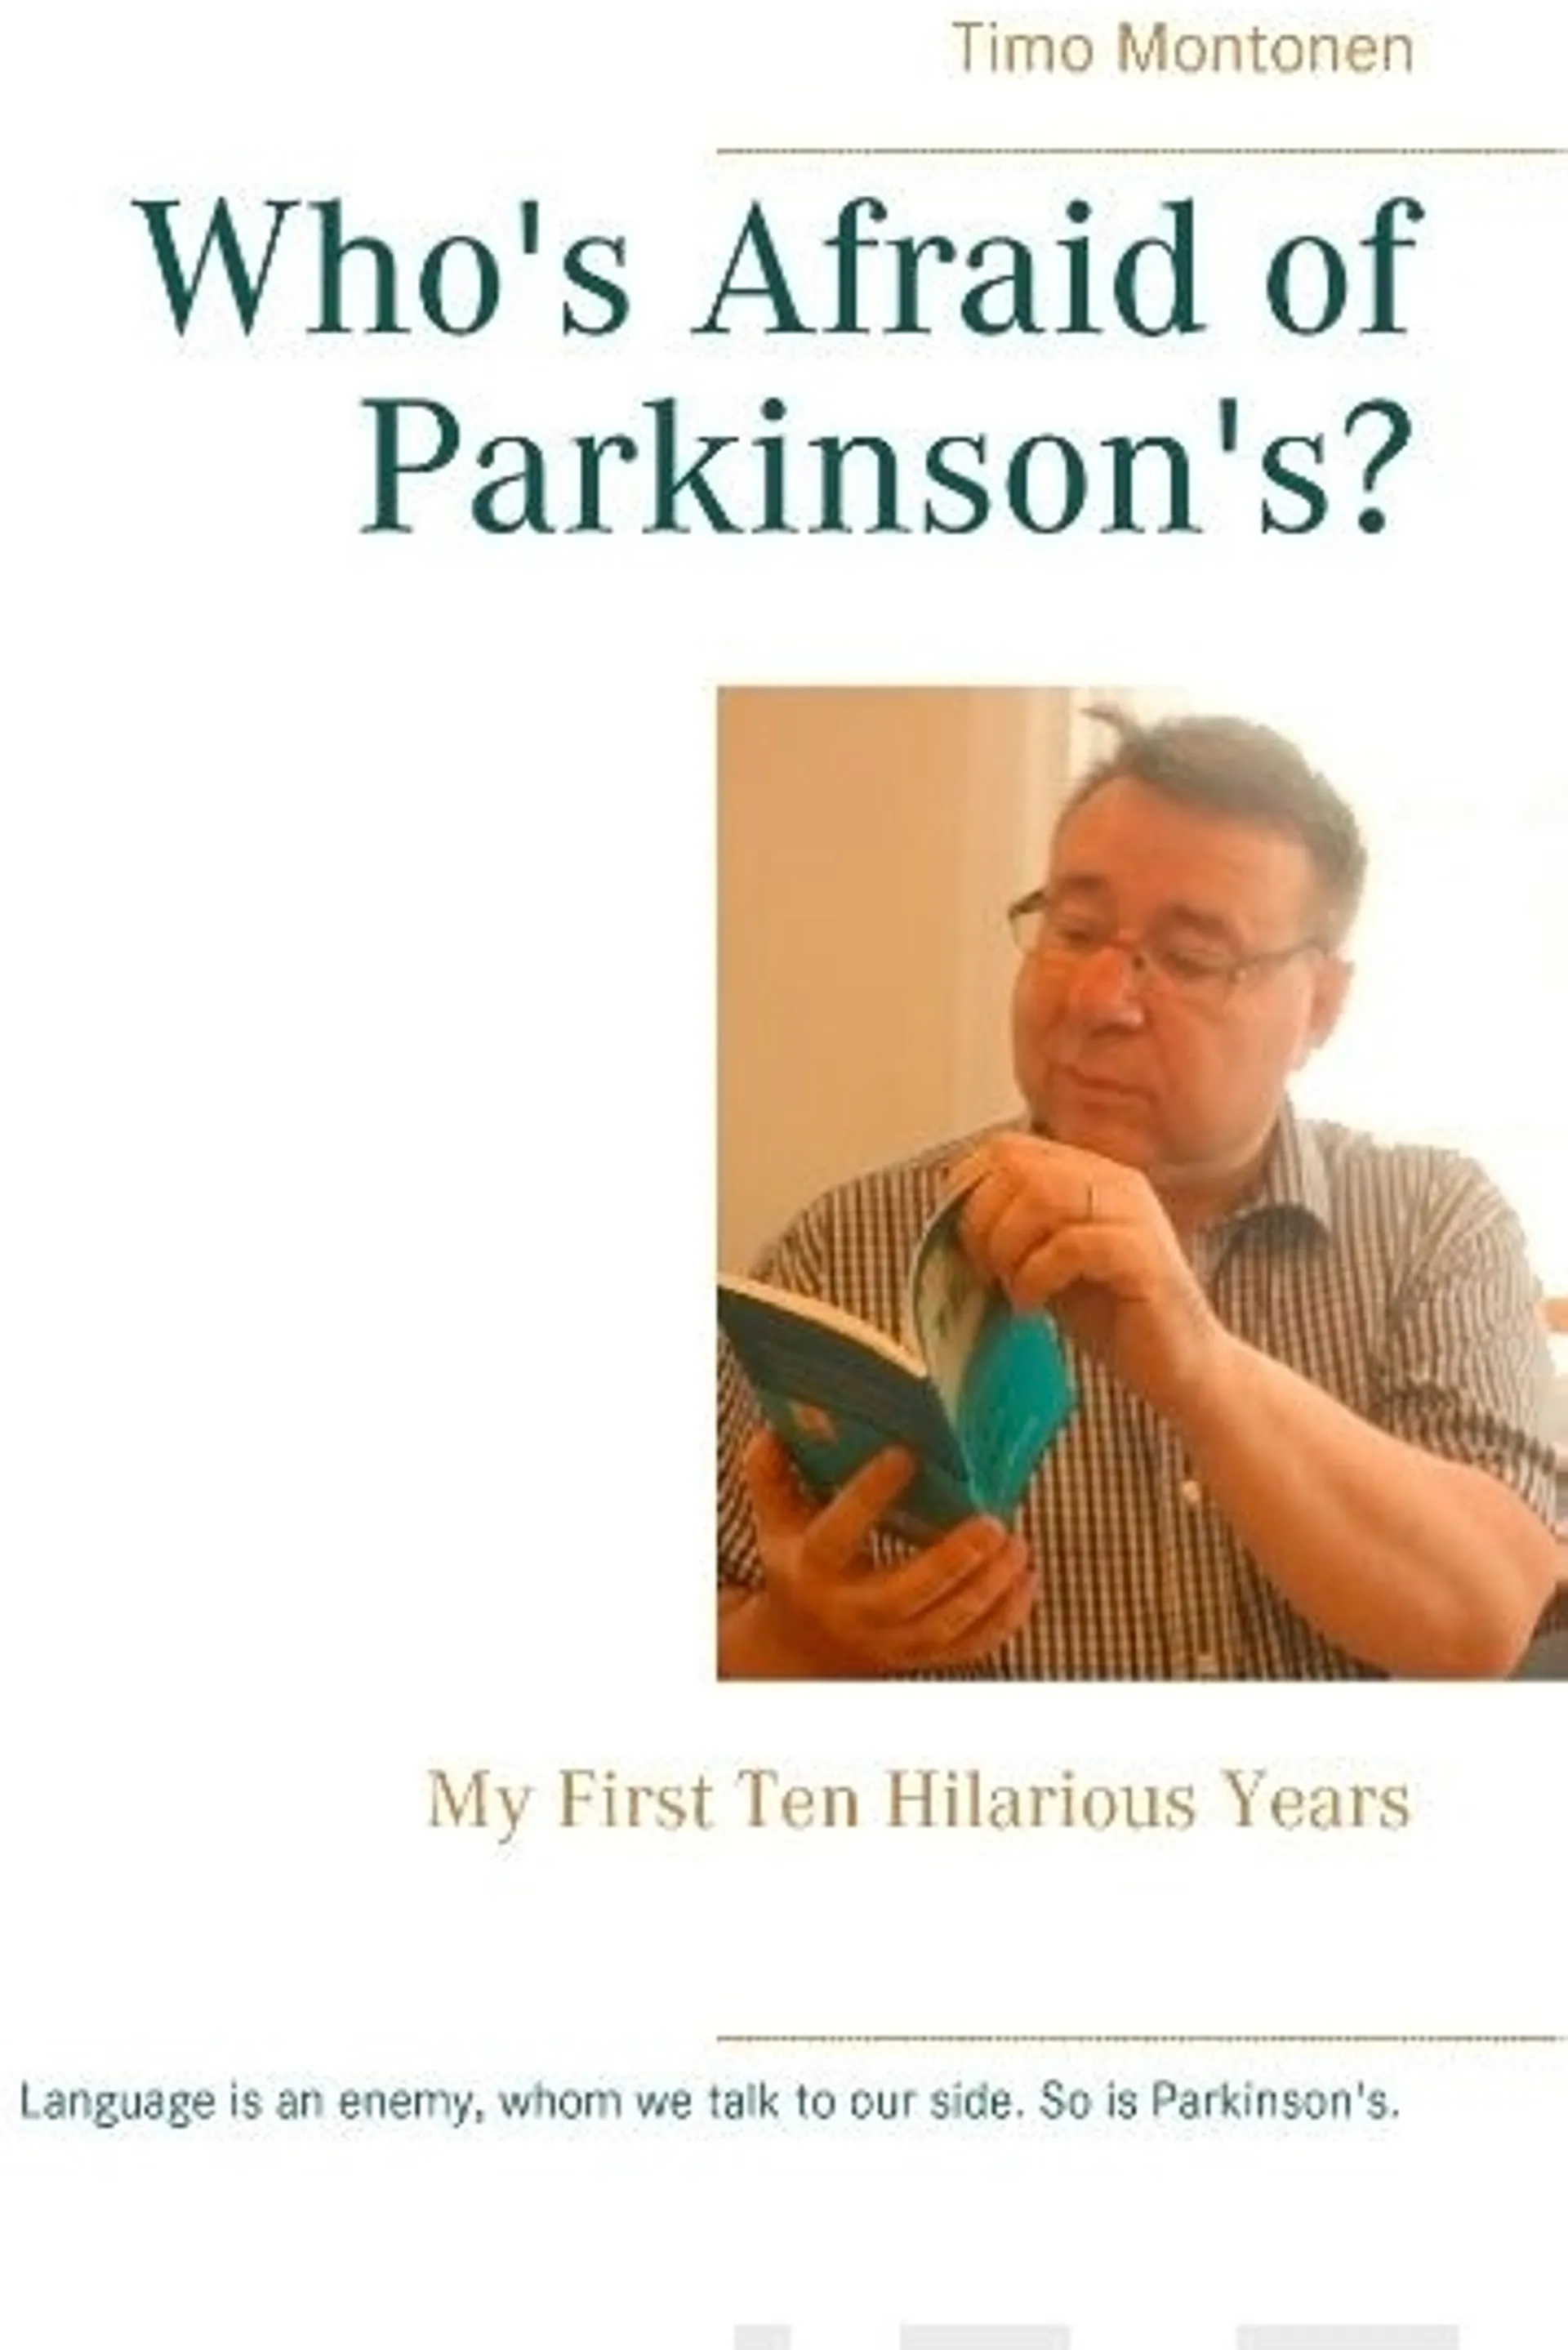 Montonen, Who's Afraid of Parkinson's?